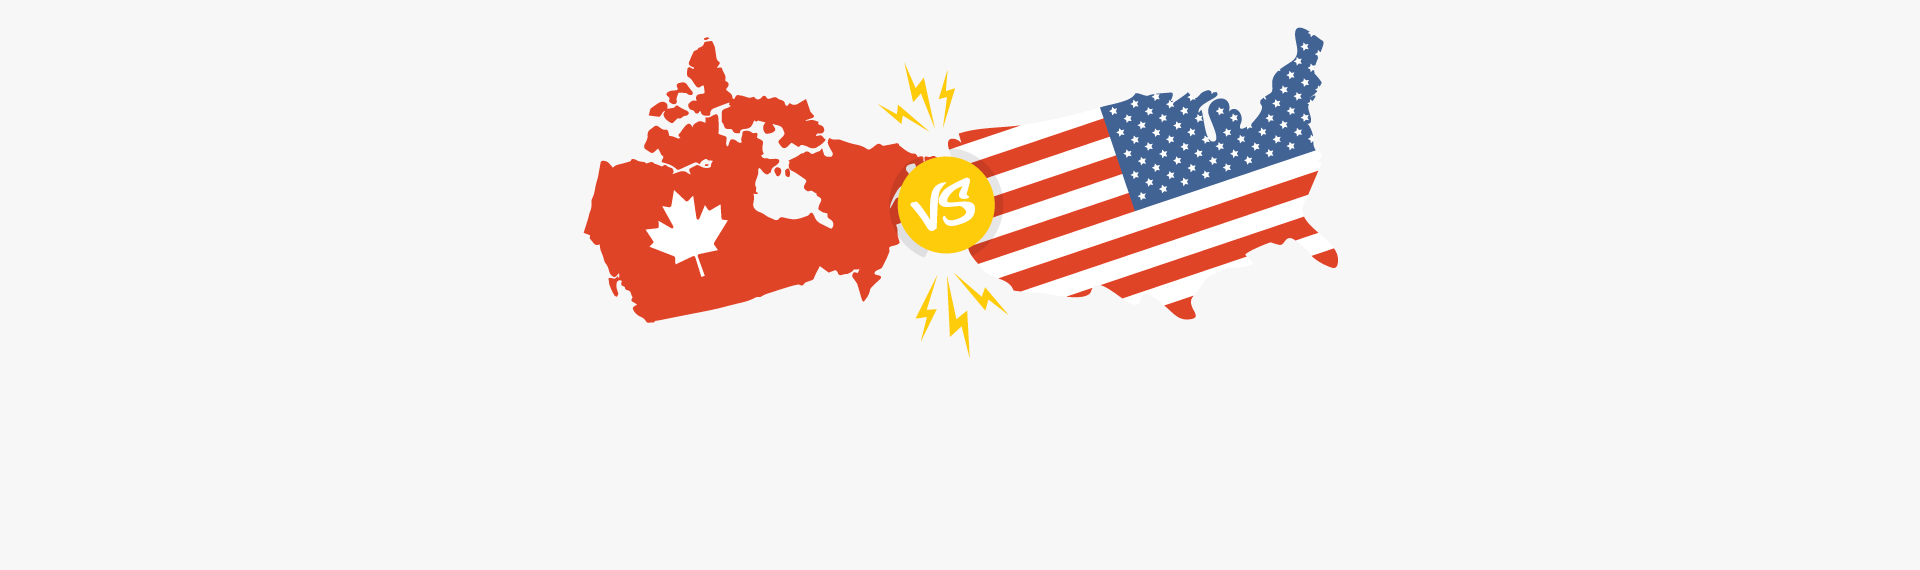 From Consumer Insights To Digital Marketing Landscape: Canada vs USA